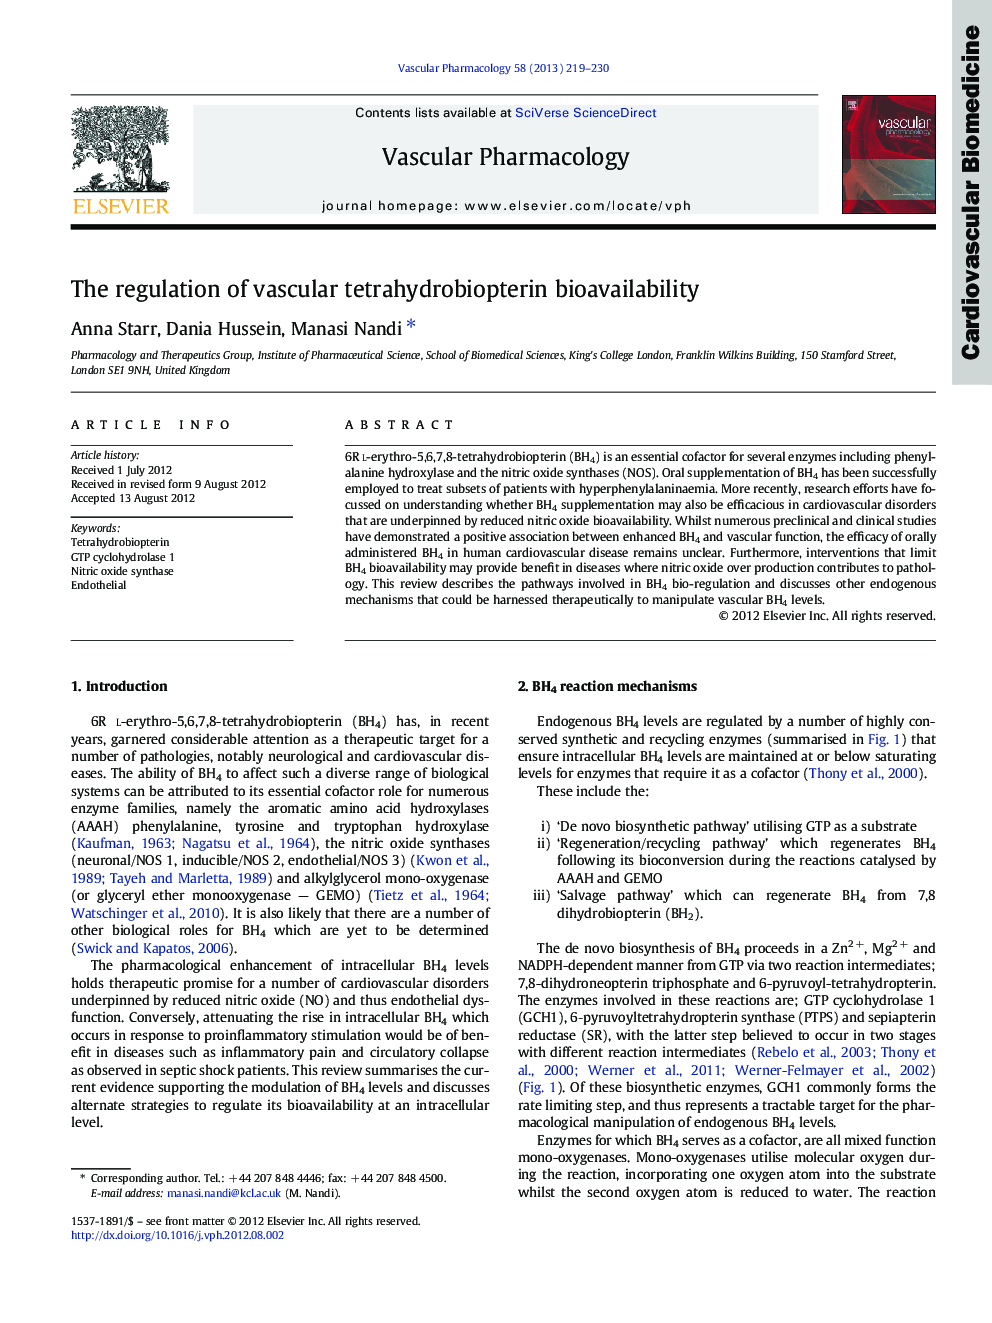 The regulation of vascular tetrahydrobiopterin bioavailability